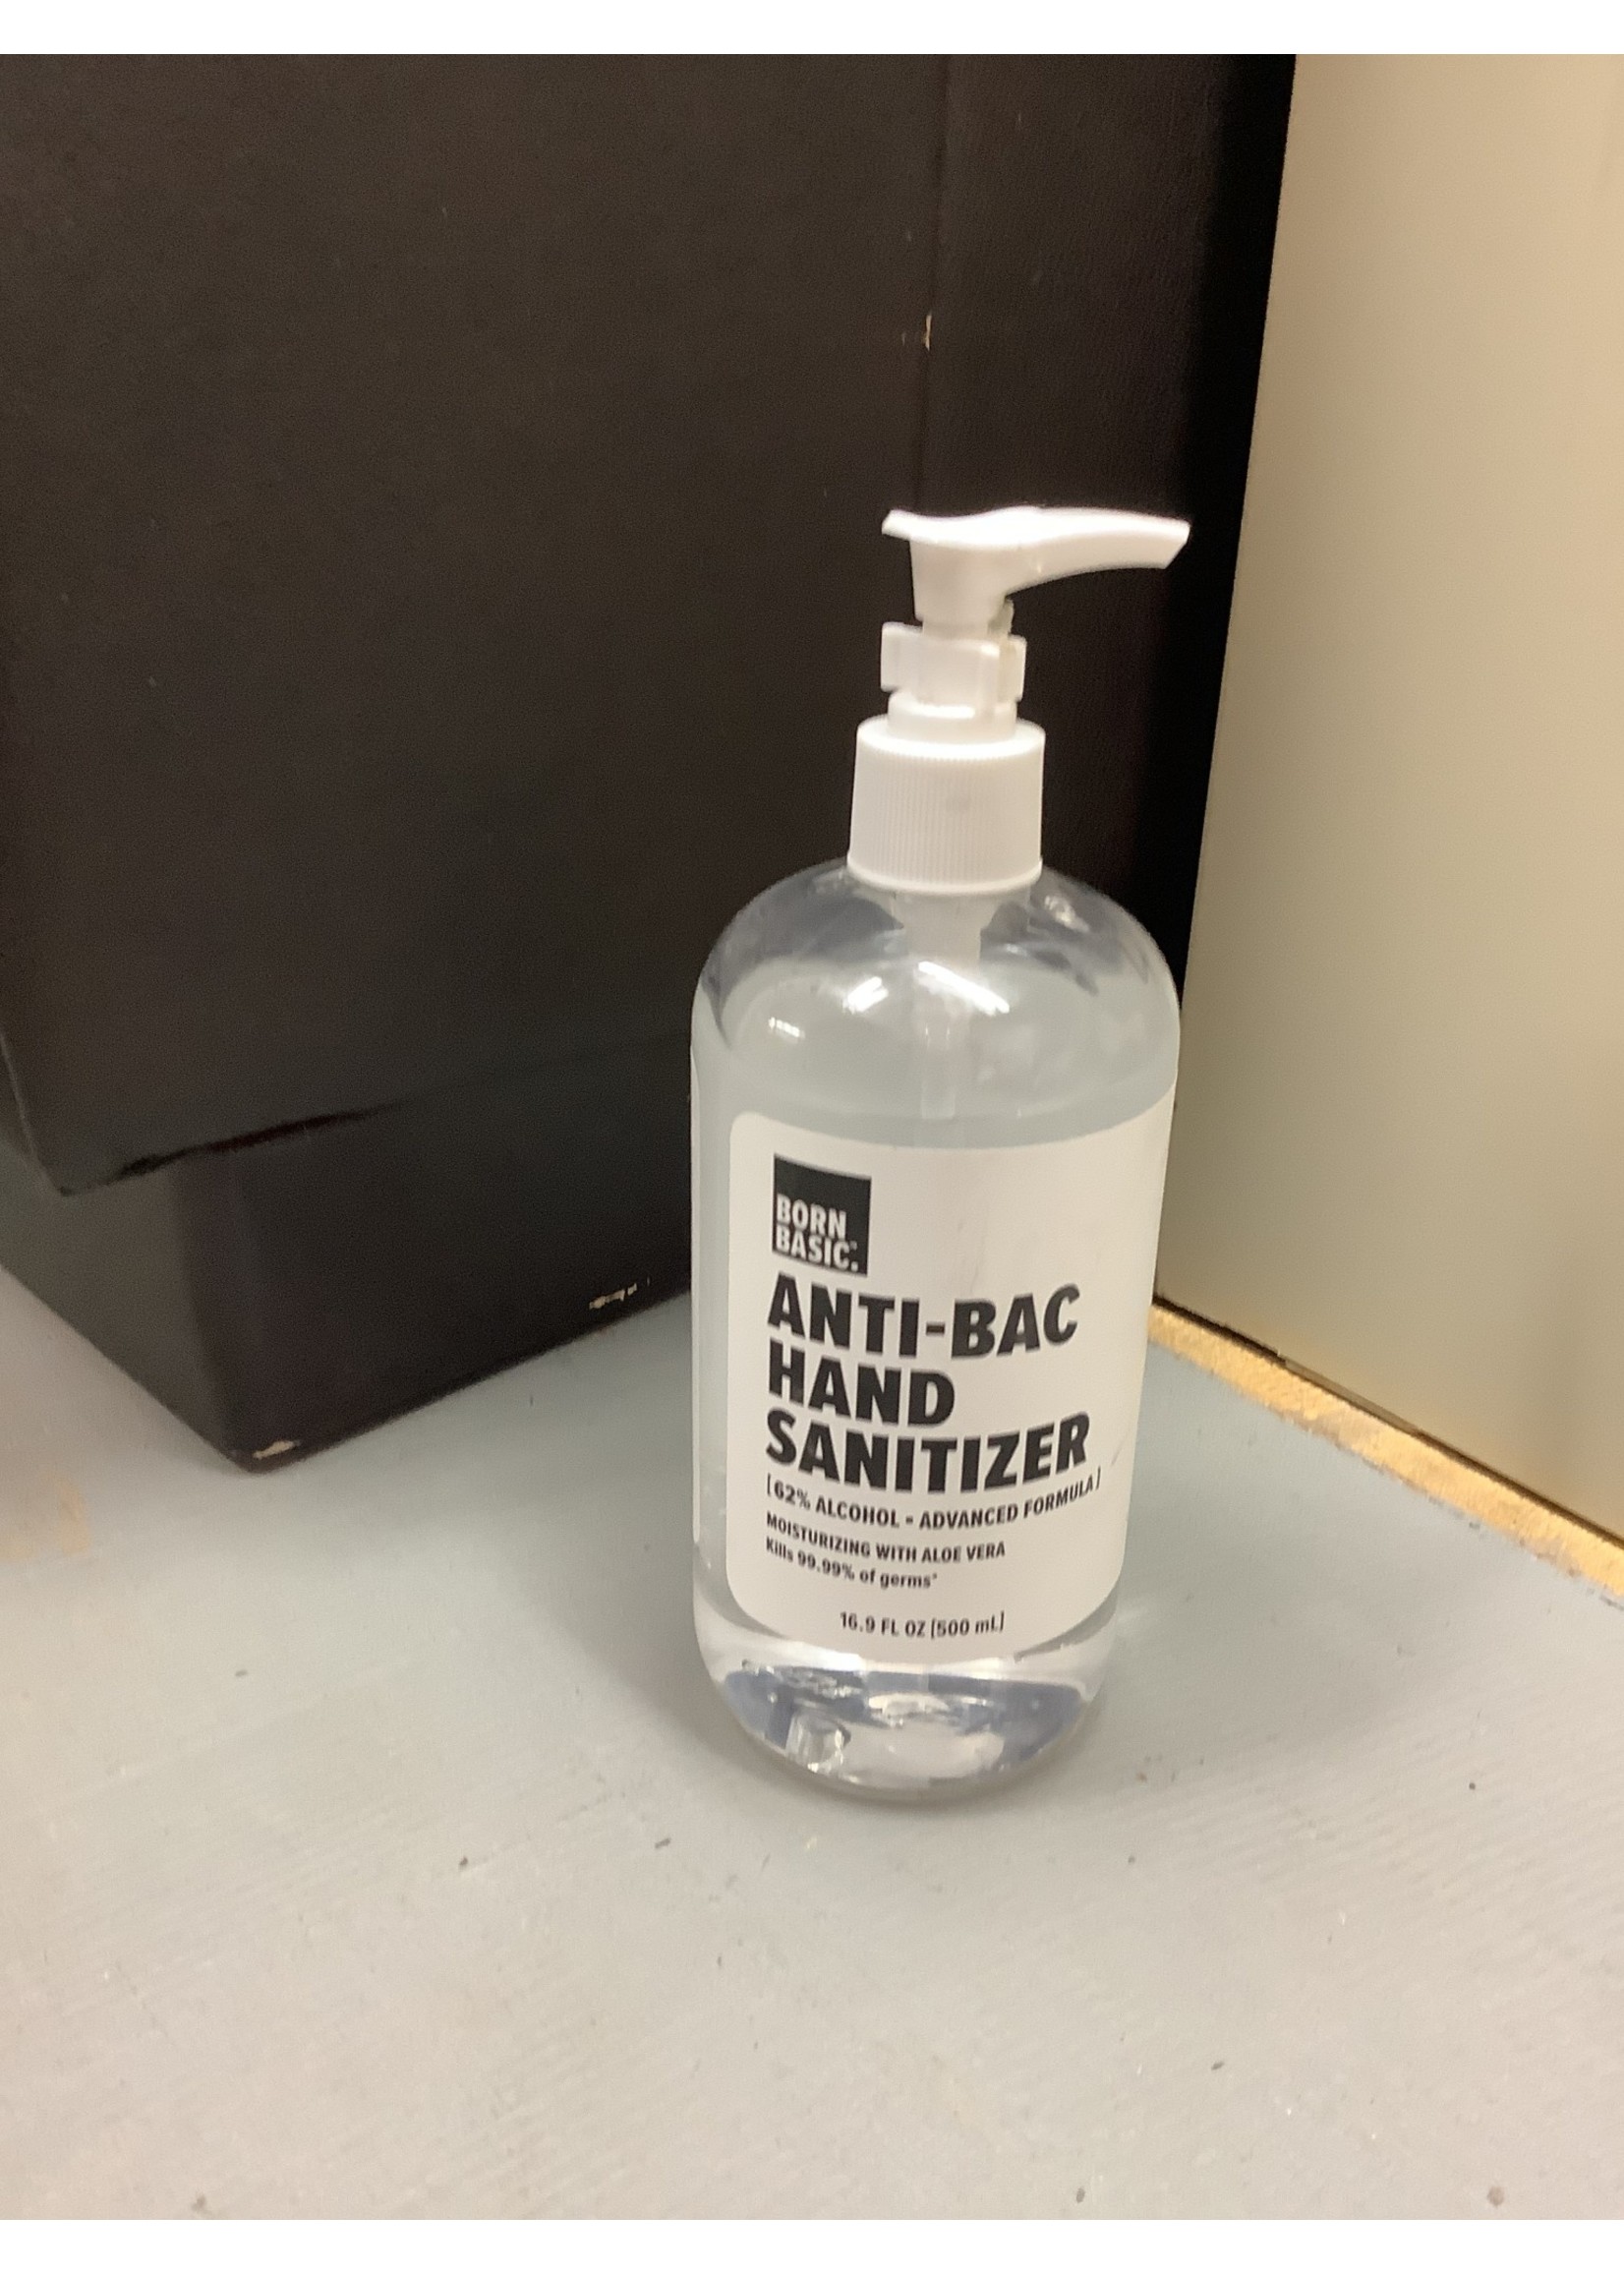 Born Basic Anti-Bac Hand Sanitizer - 16.9 fl oz